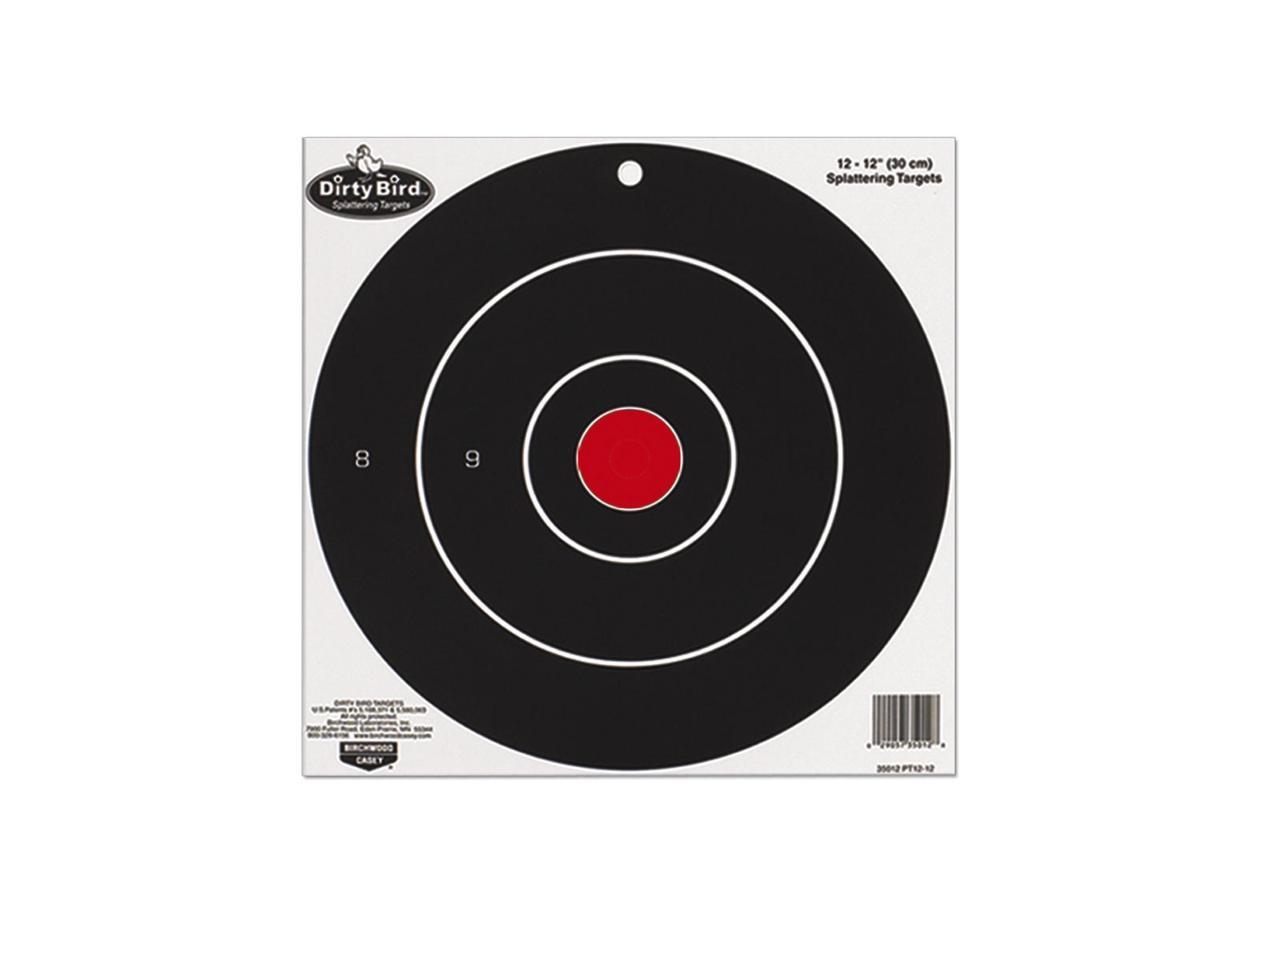 Birchwood Casey Dirty Bird 12" Shooting Targets Large Bullseye 12 Pack # 35012